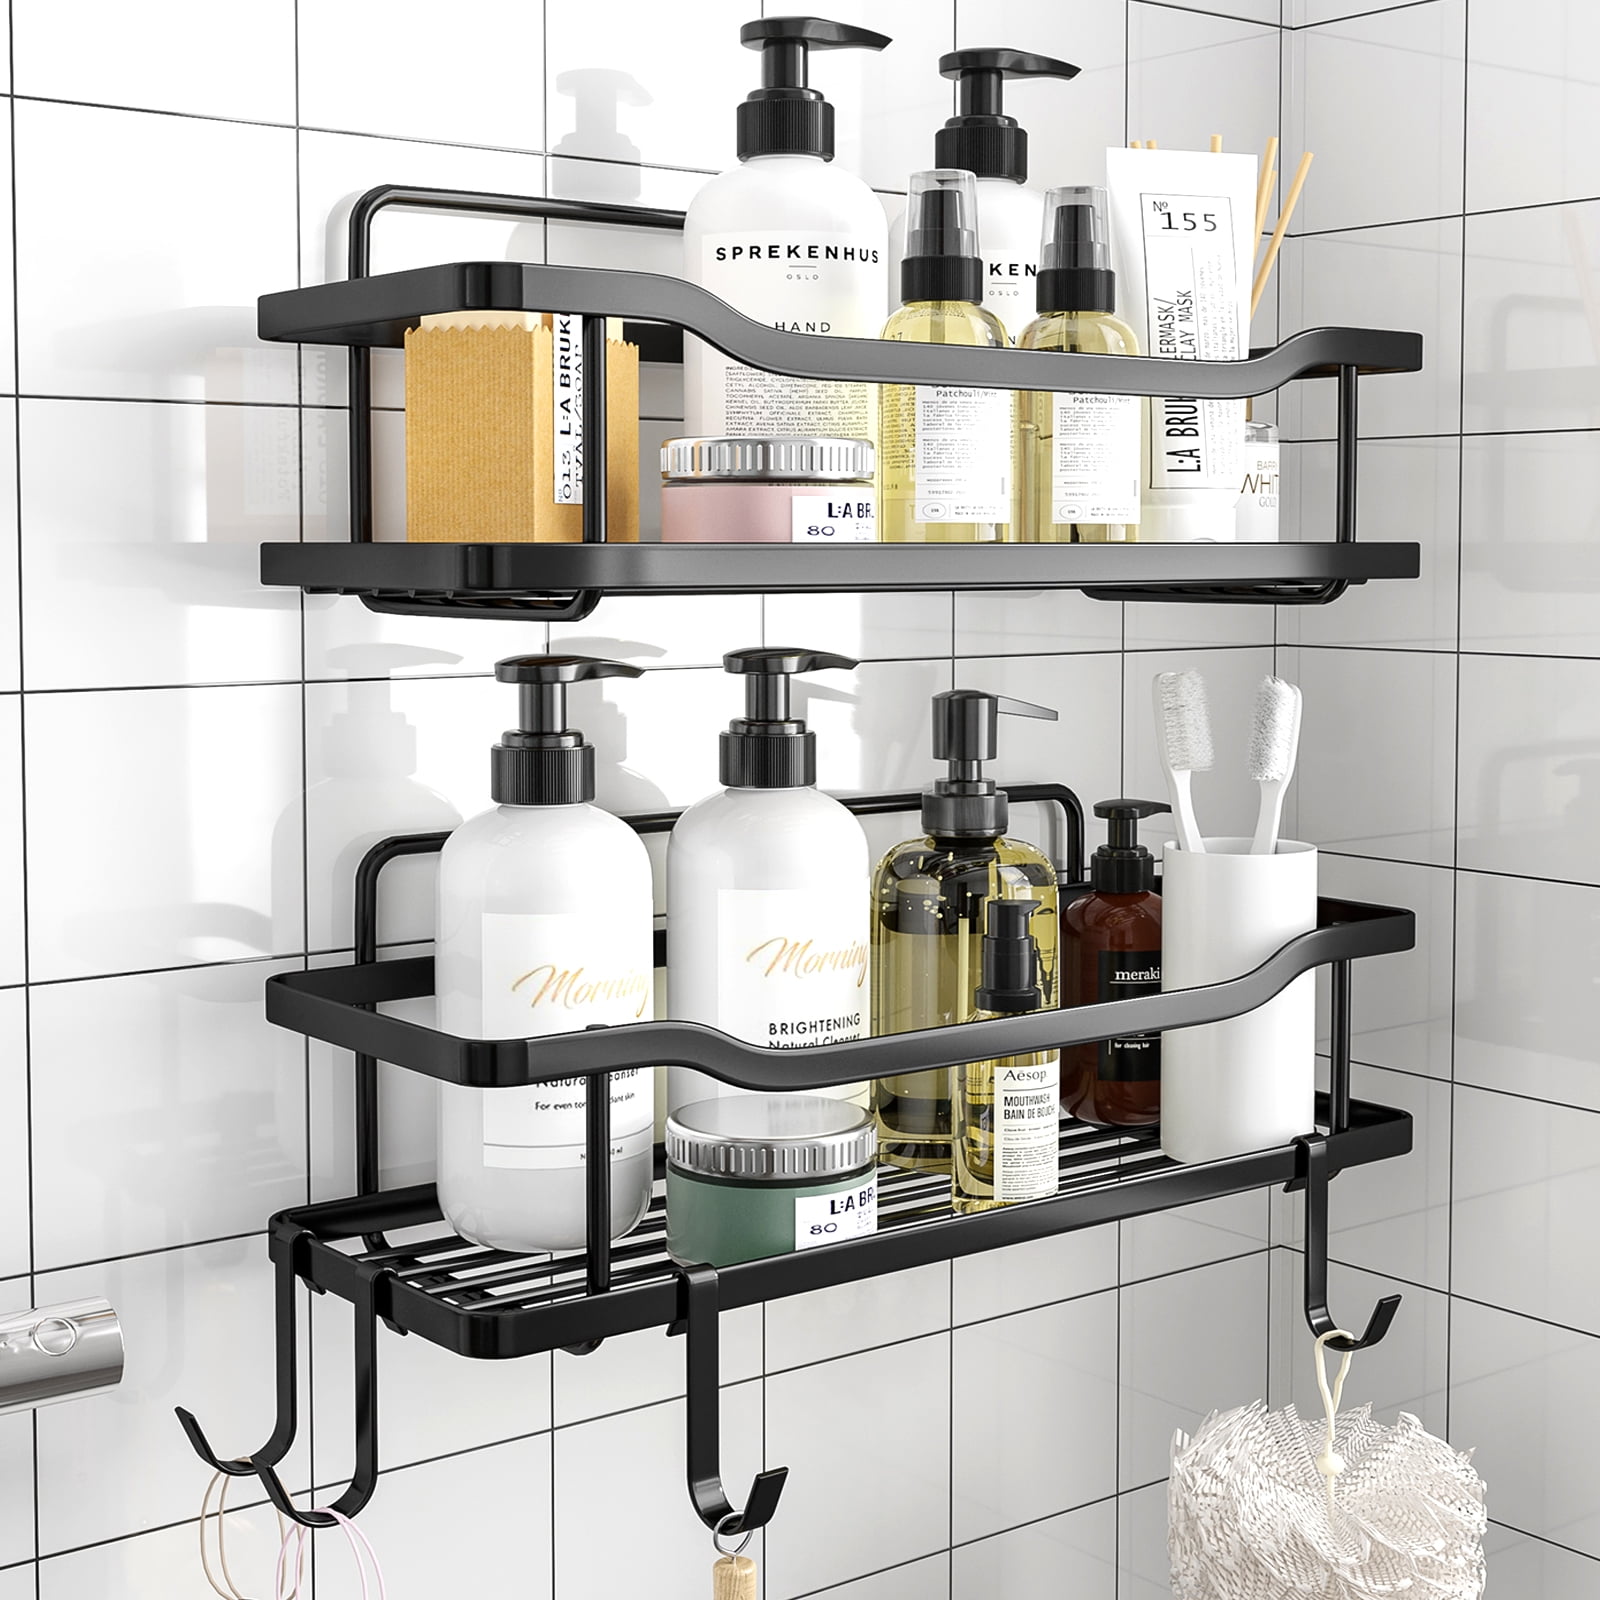  DEERFO Shower Caddy 6 Pack - Extra-Large Shower Organizer -  Upgraded Stronger Adhesive Shower Shelf for Inside Shower - Rustproof  Stainless Steel Shower Shelves for Kitchen and Bathroom Organizer : Home &  Kitchen